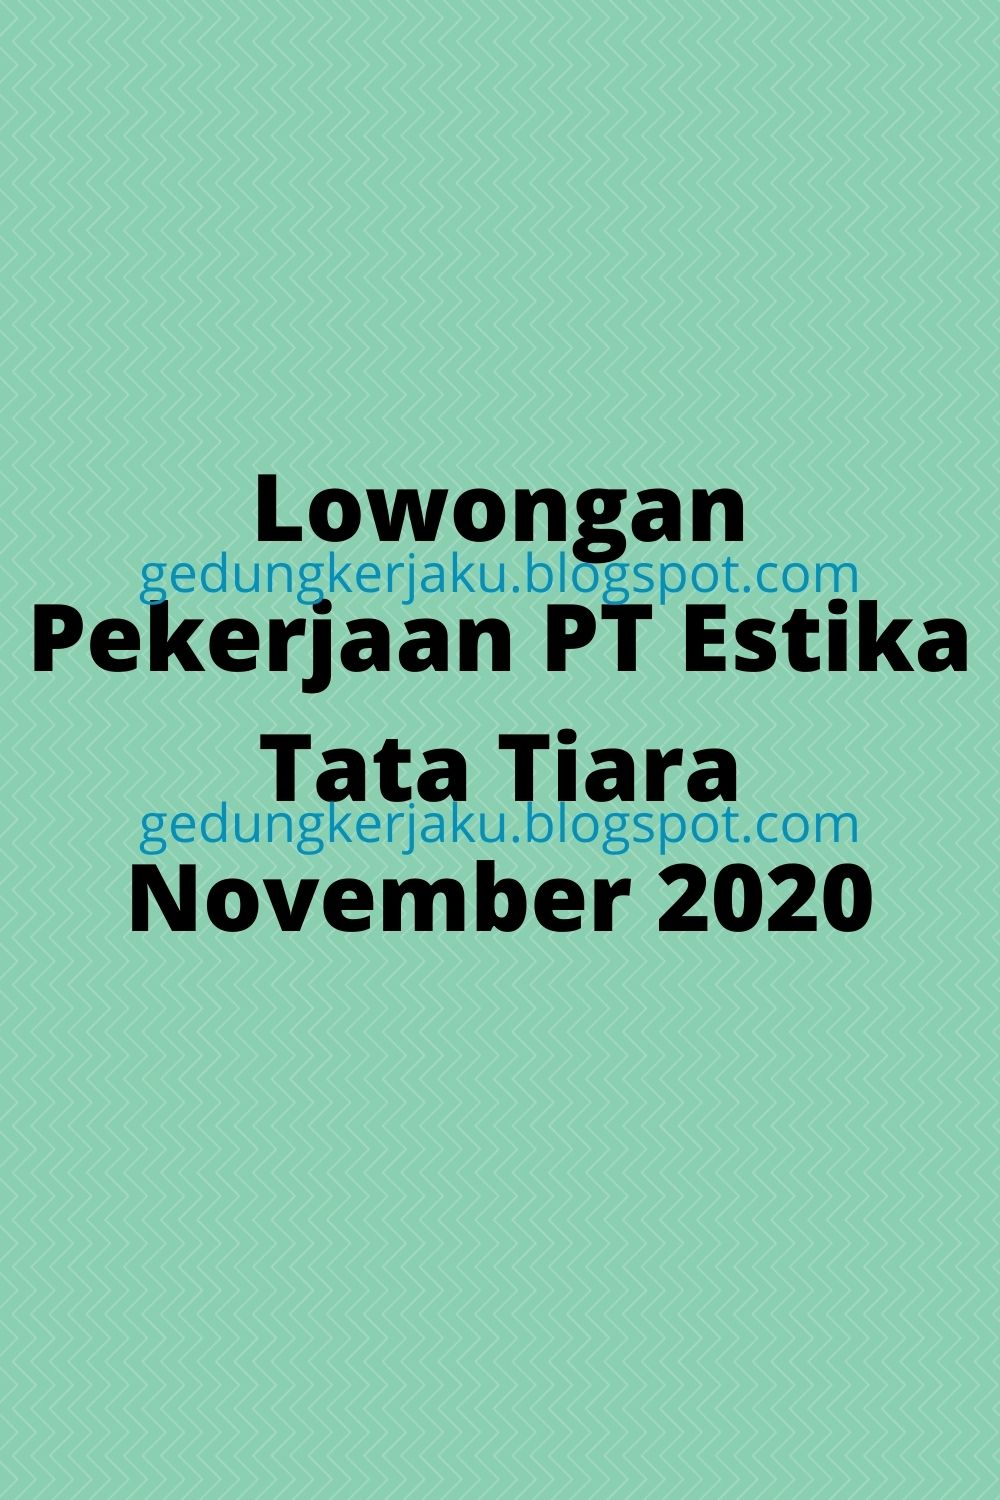 Lowongan Pekerjaan PT Estika Tata Tiara November 2020